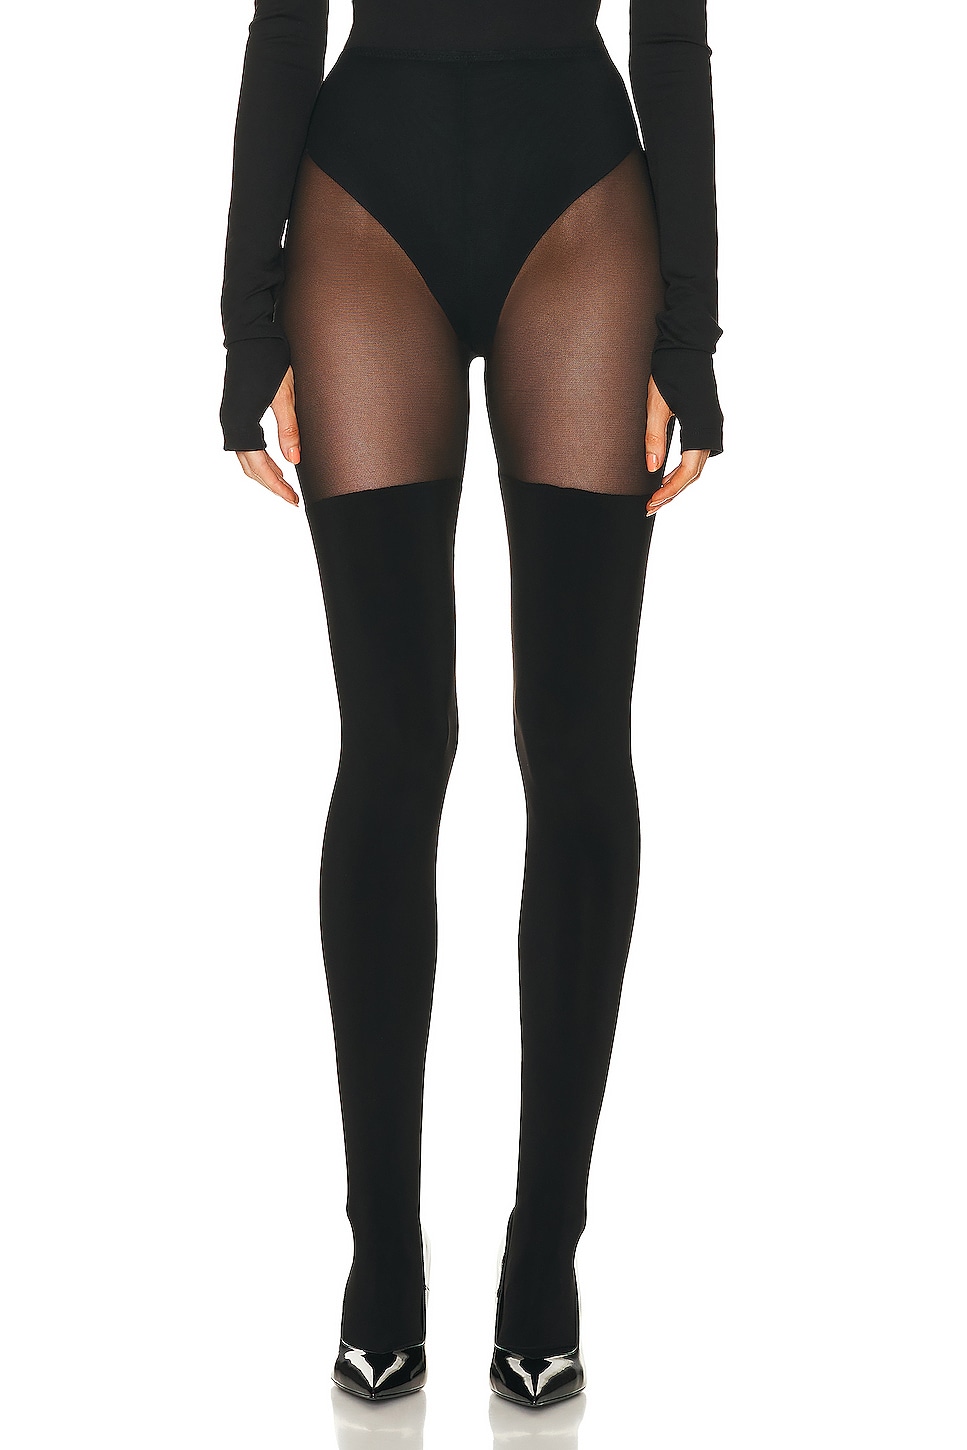 Image 1 of Norma Kamali Thigh High Spliced Legging in Black & Black Mesh